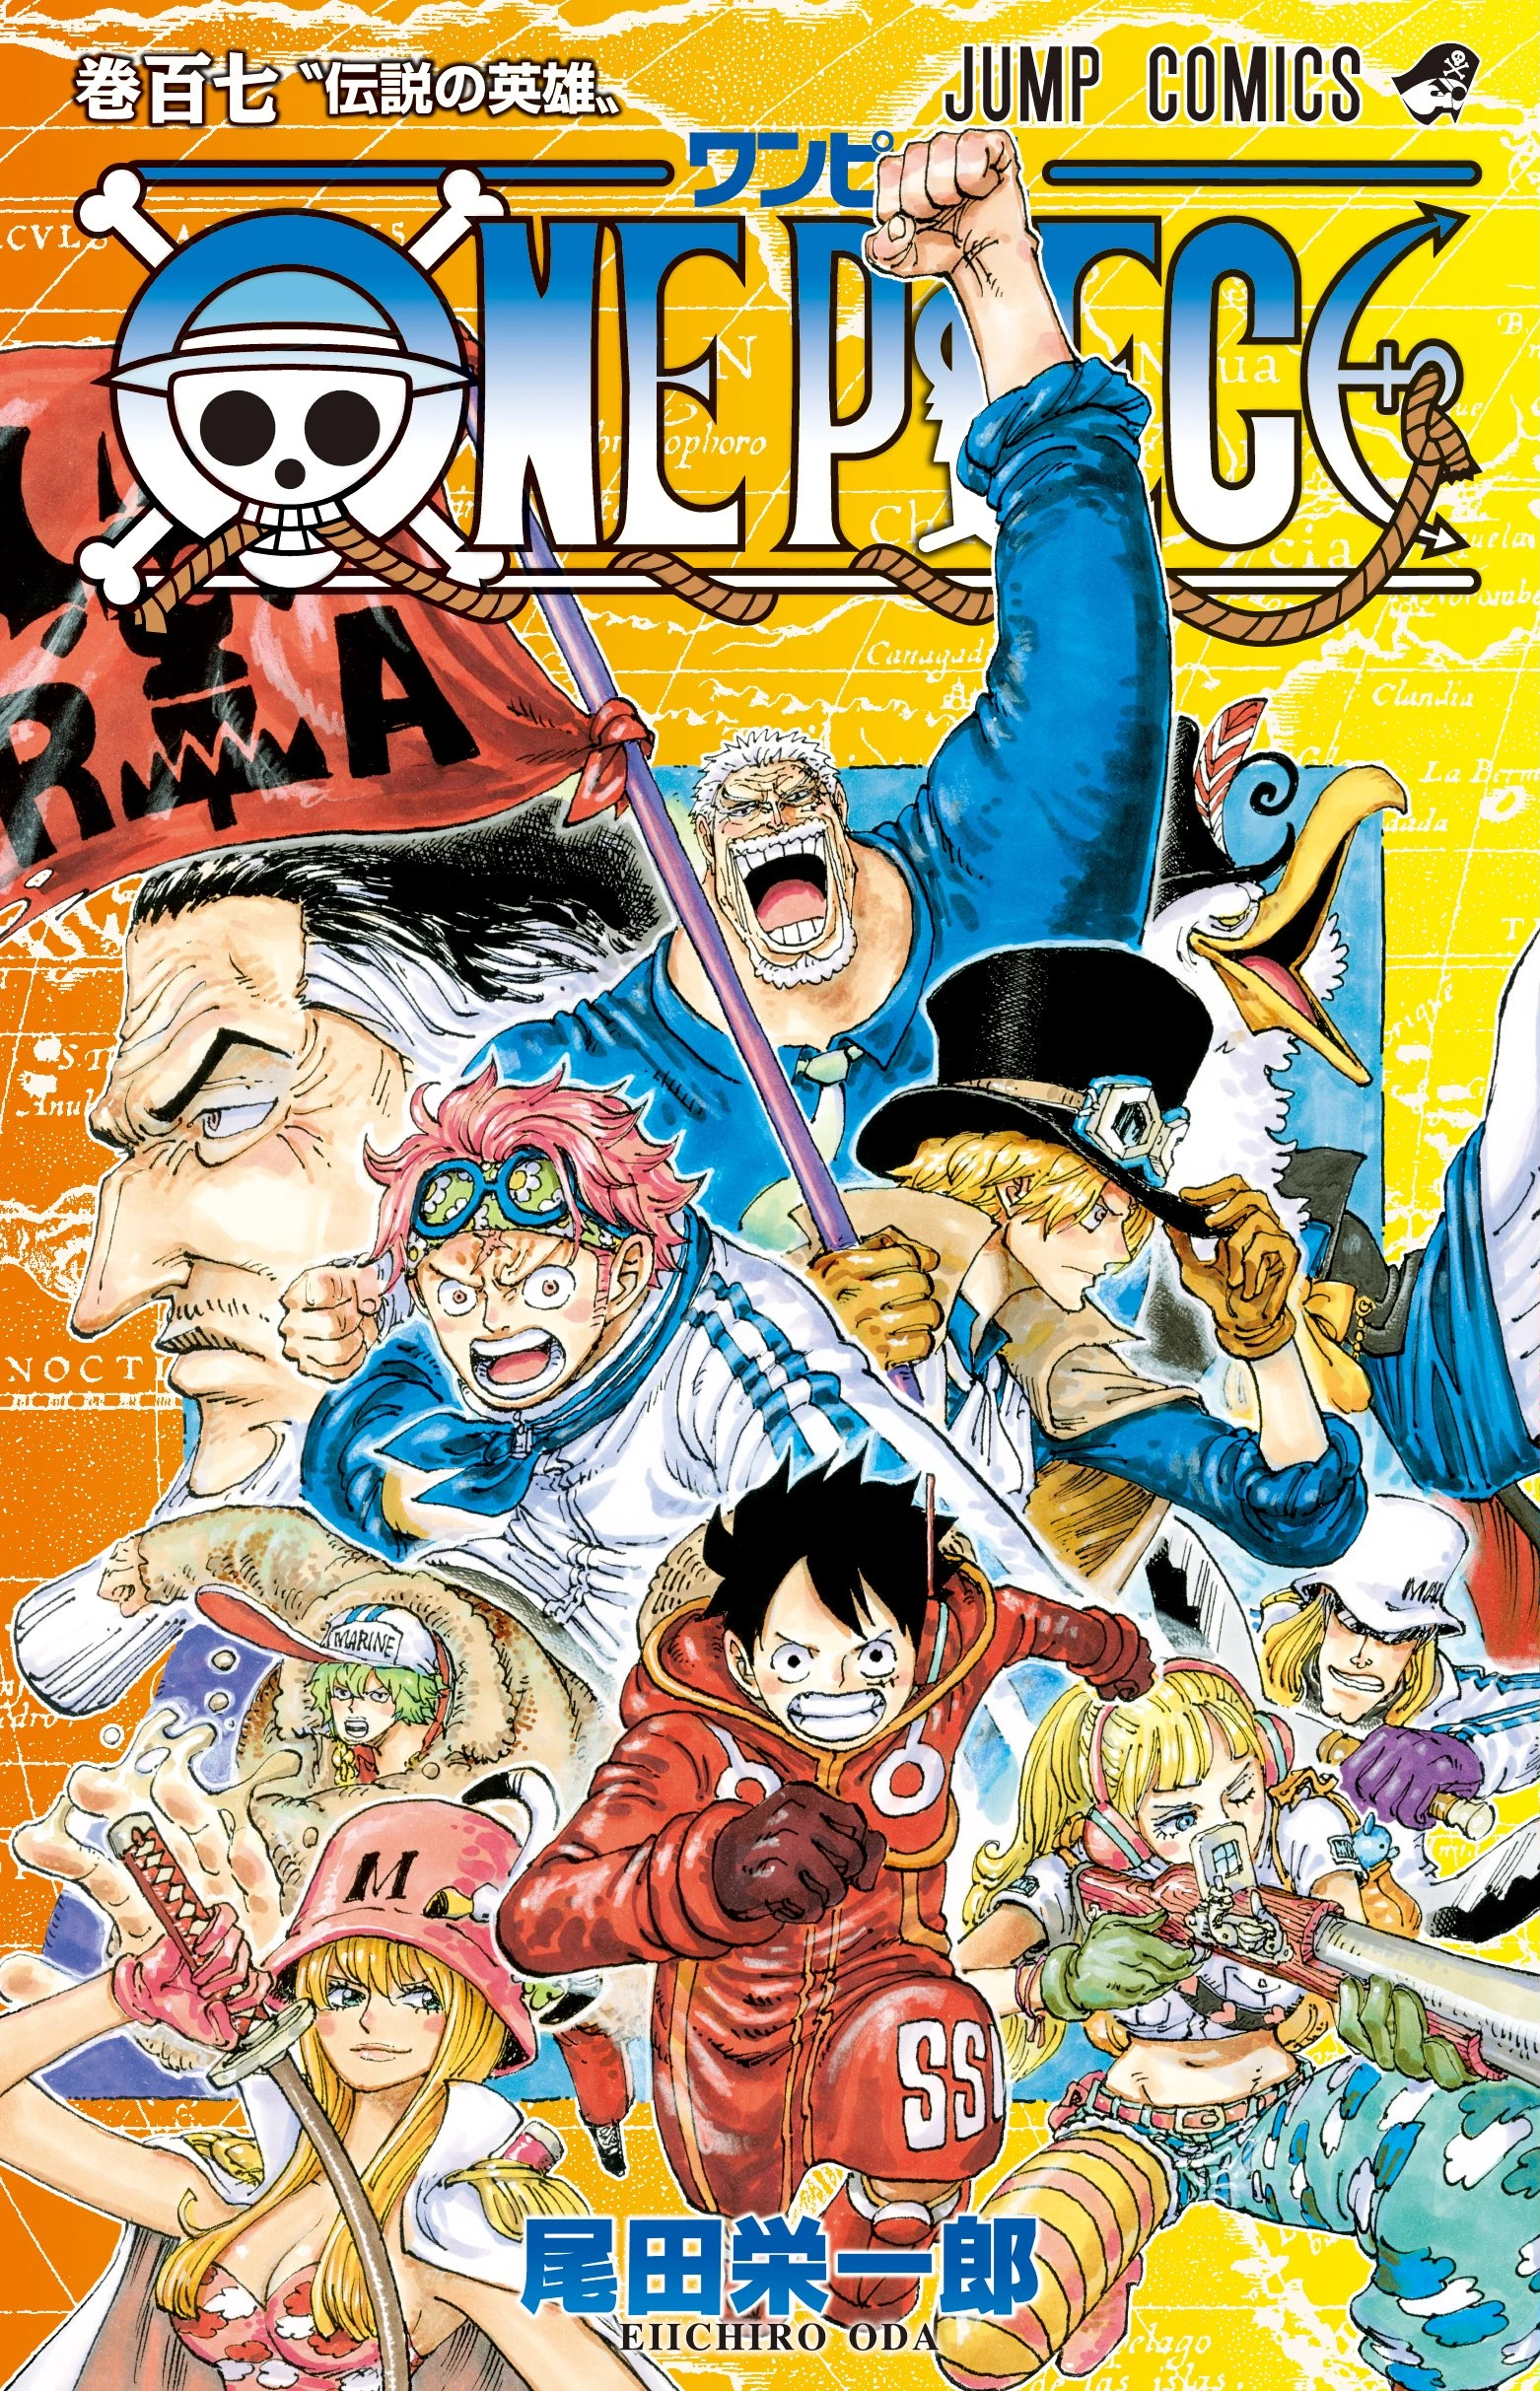 One Piece Stampede  One piece drawing, One piece manga, Star comics